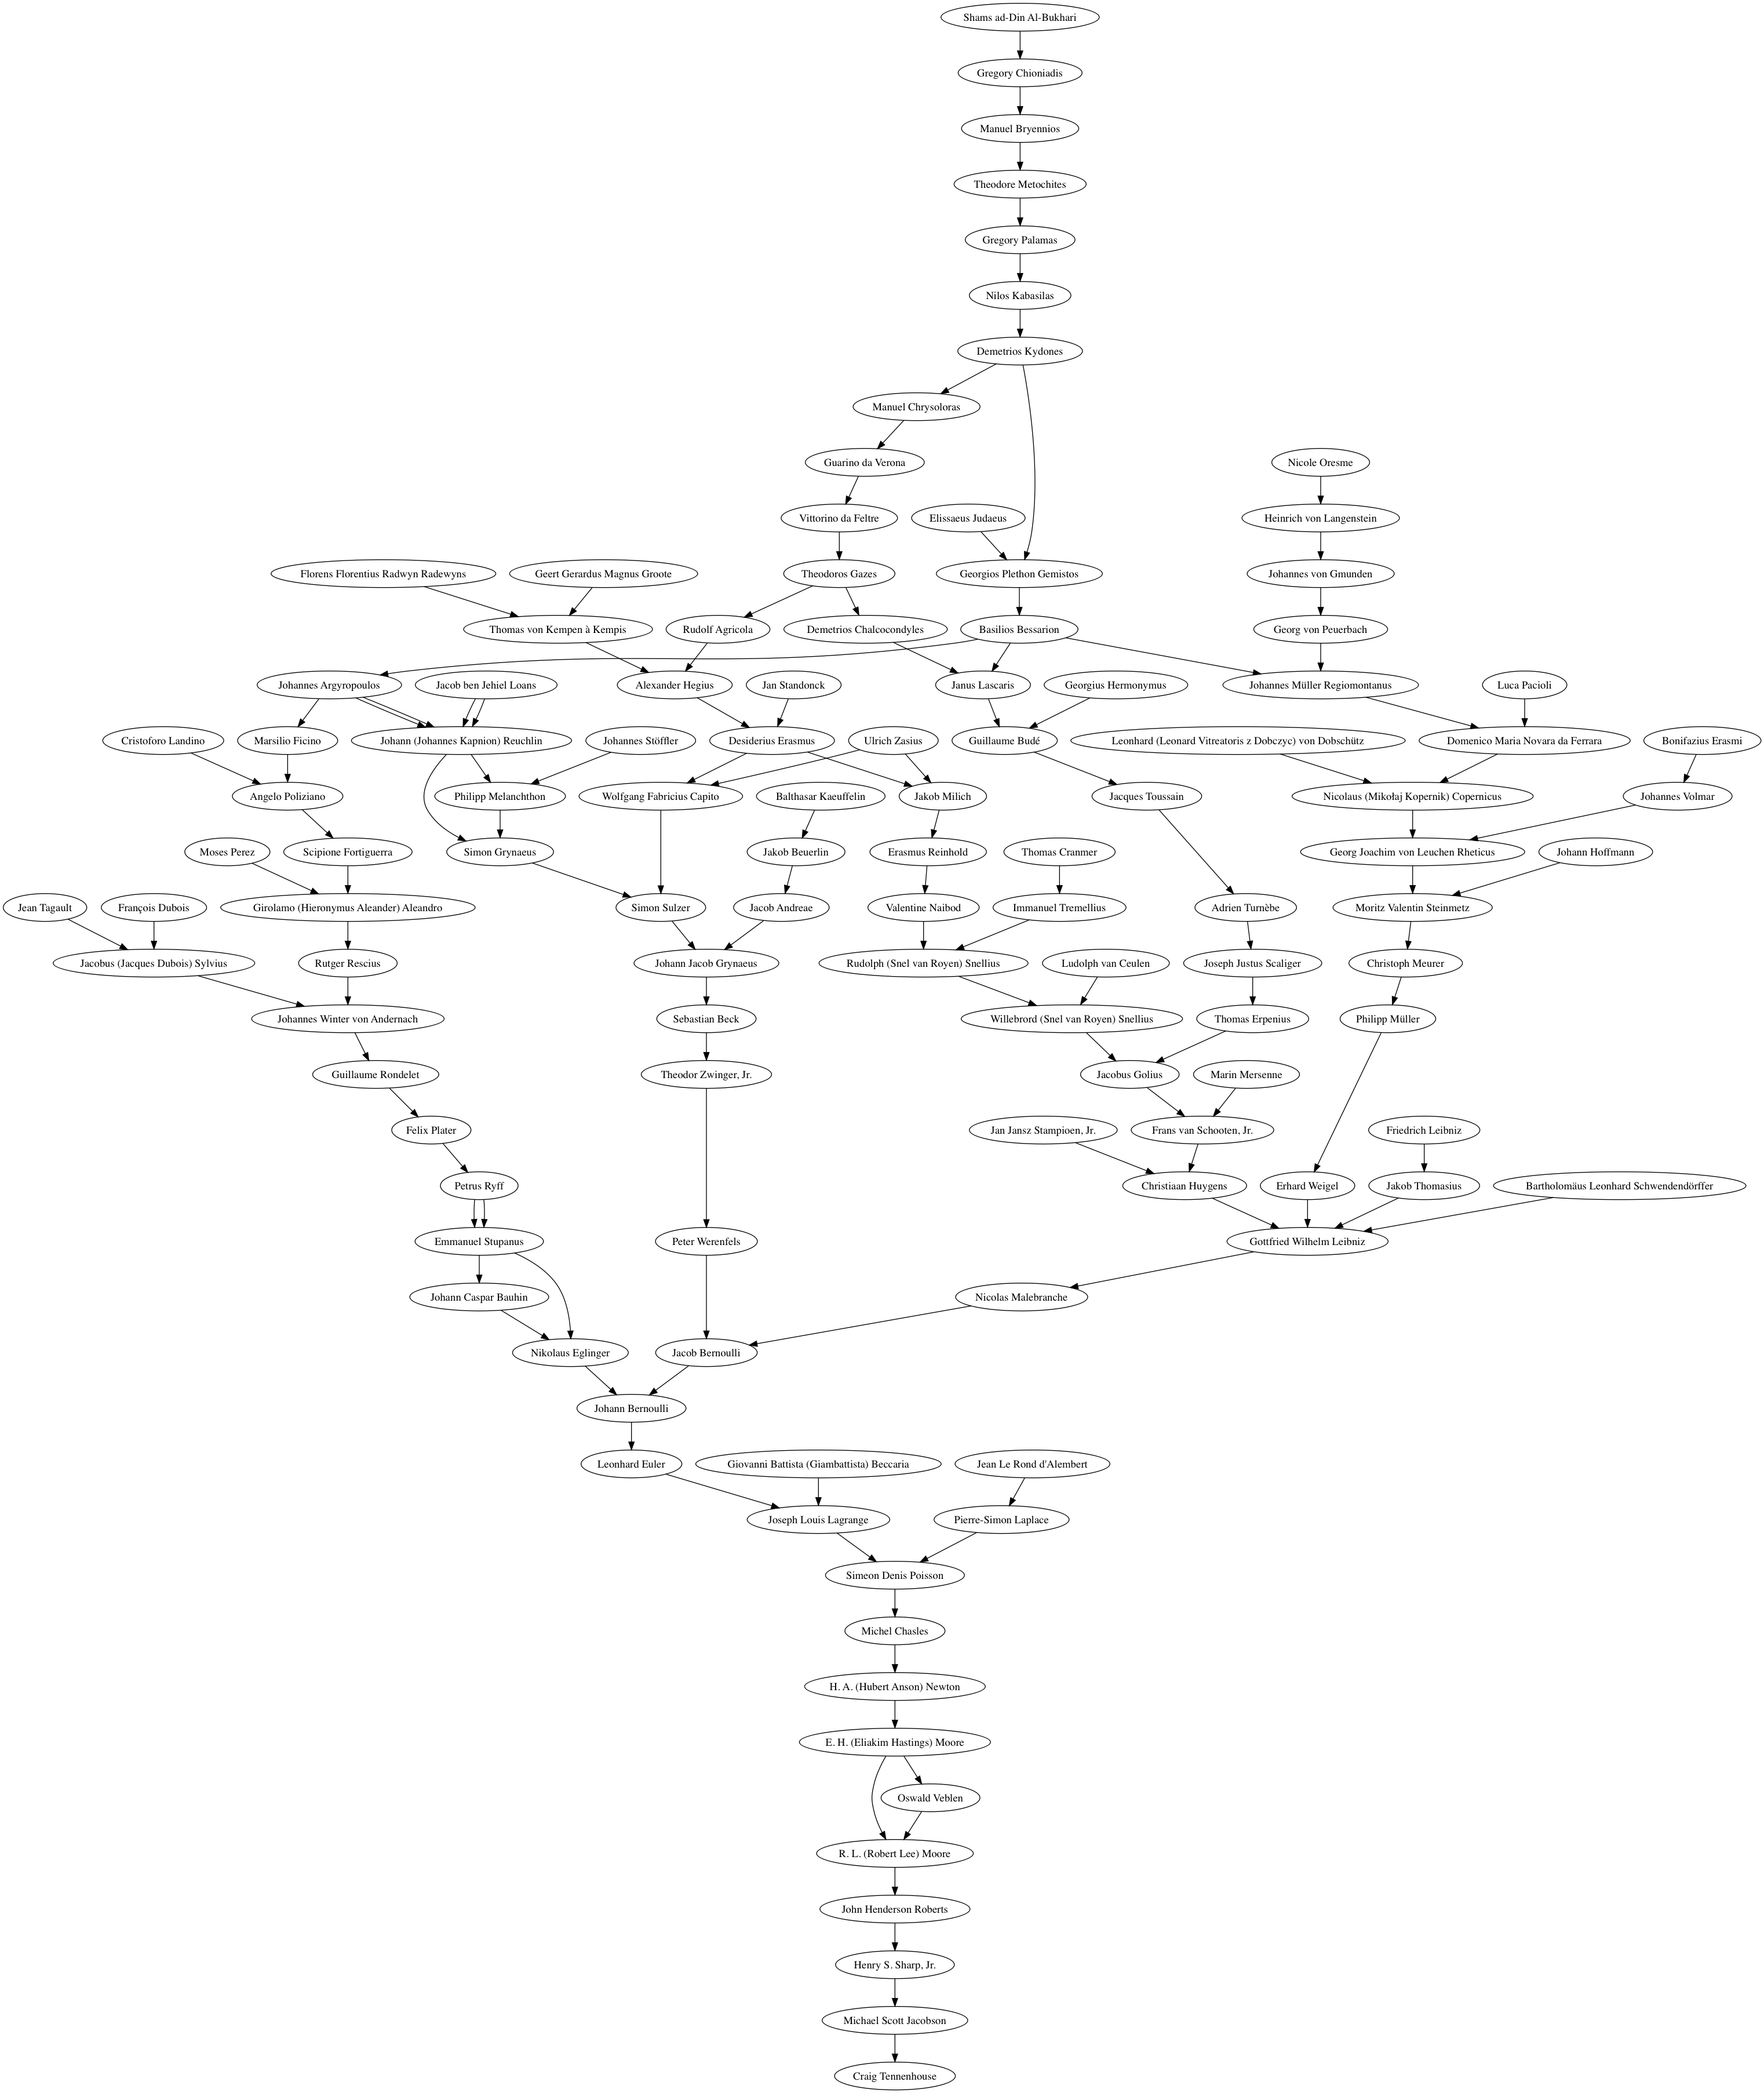 Tree of Craig's academic lineage